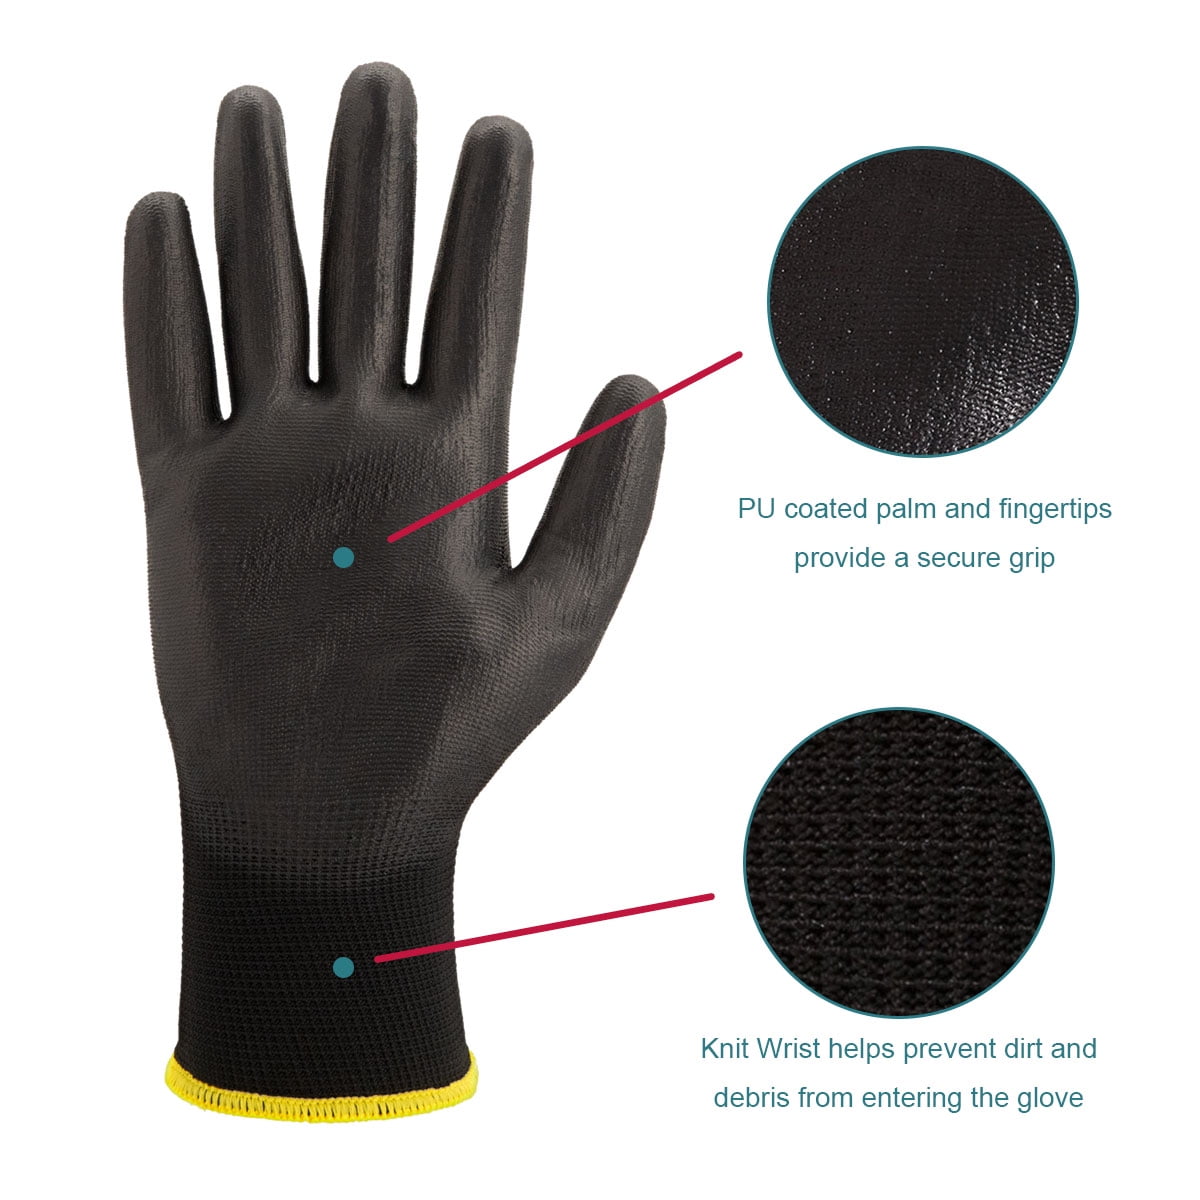 KAYGO Work Gloves PU Coated-12 Pairs, KG15P,Nylon Lite Polyurethane Safety Work Gloves, Gray Polyurethane Coated, Knit Wrist Cuff,Ideal for Light